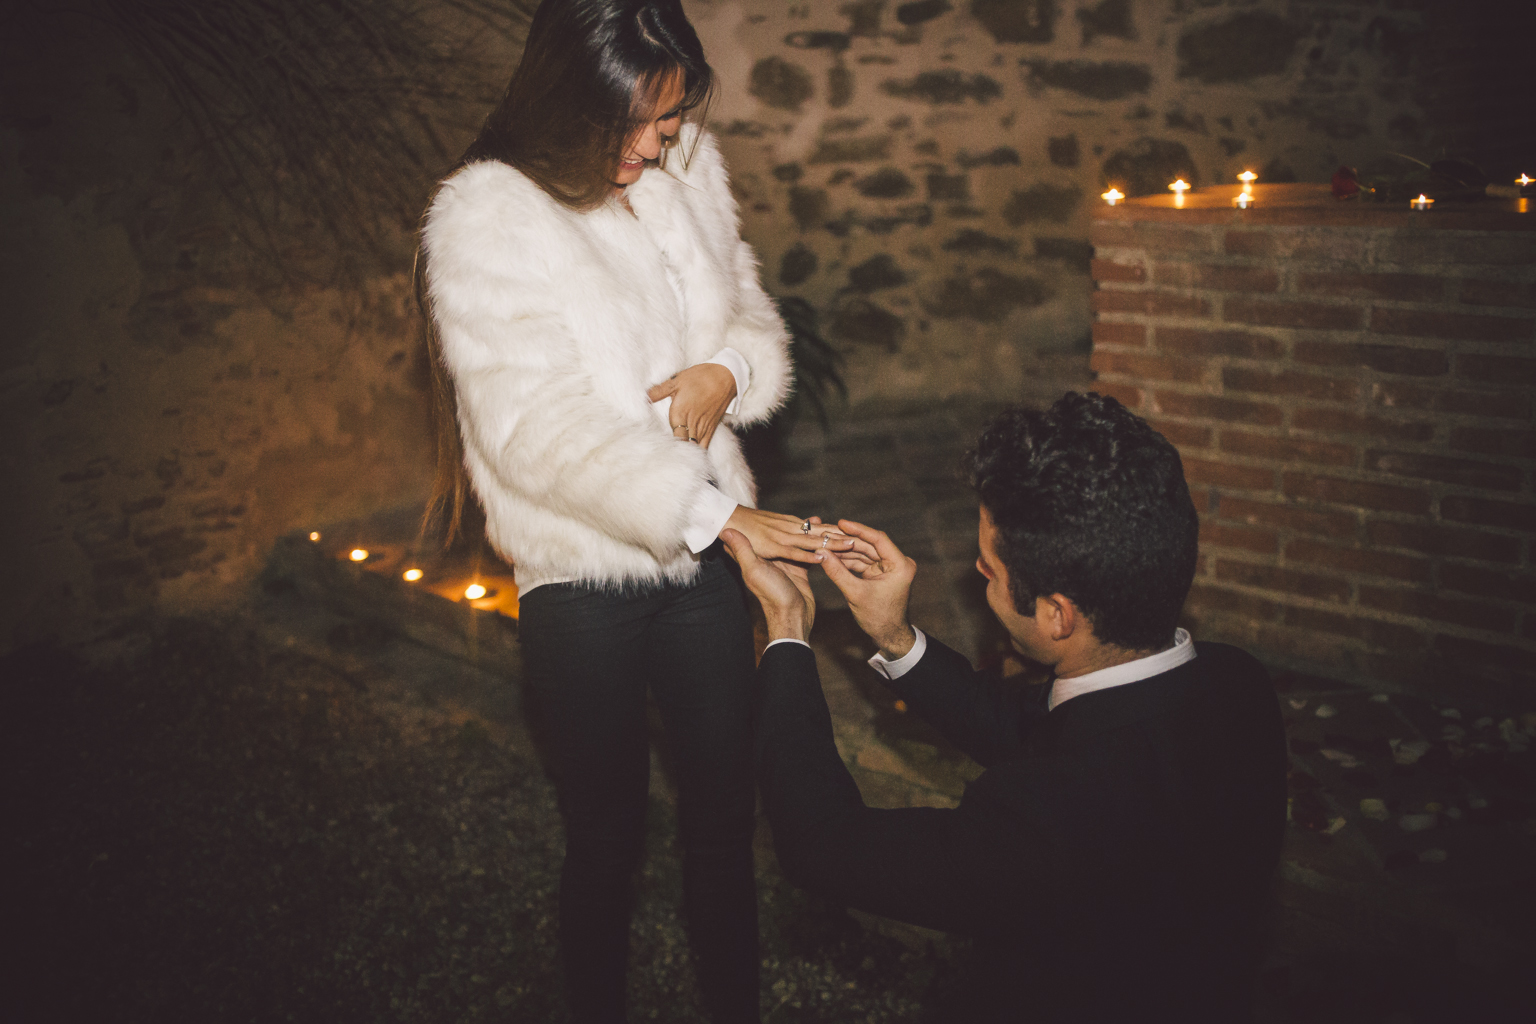 fotografo de bodas barcelona :: pedida de mano sorpresa :: pedida de mano romántica sorpresa :: pedida de manos con velas :: preboda en barcelona 